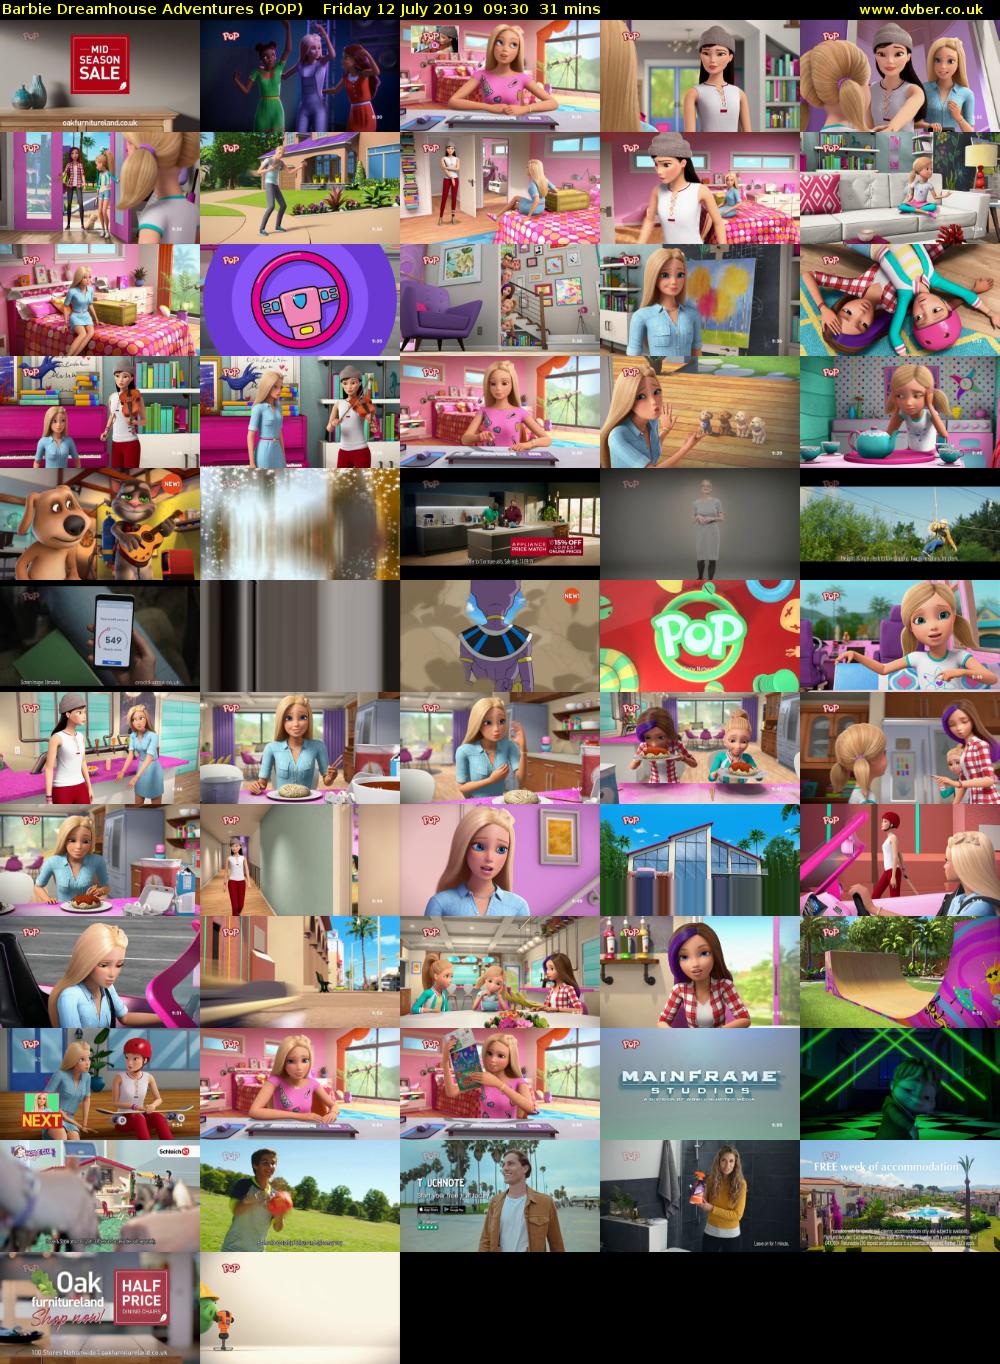 Barbie Dreamhouse Adventures (POP) Friday 12 July 2019 09:30 - 10:01